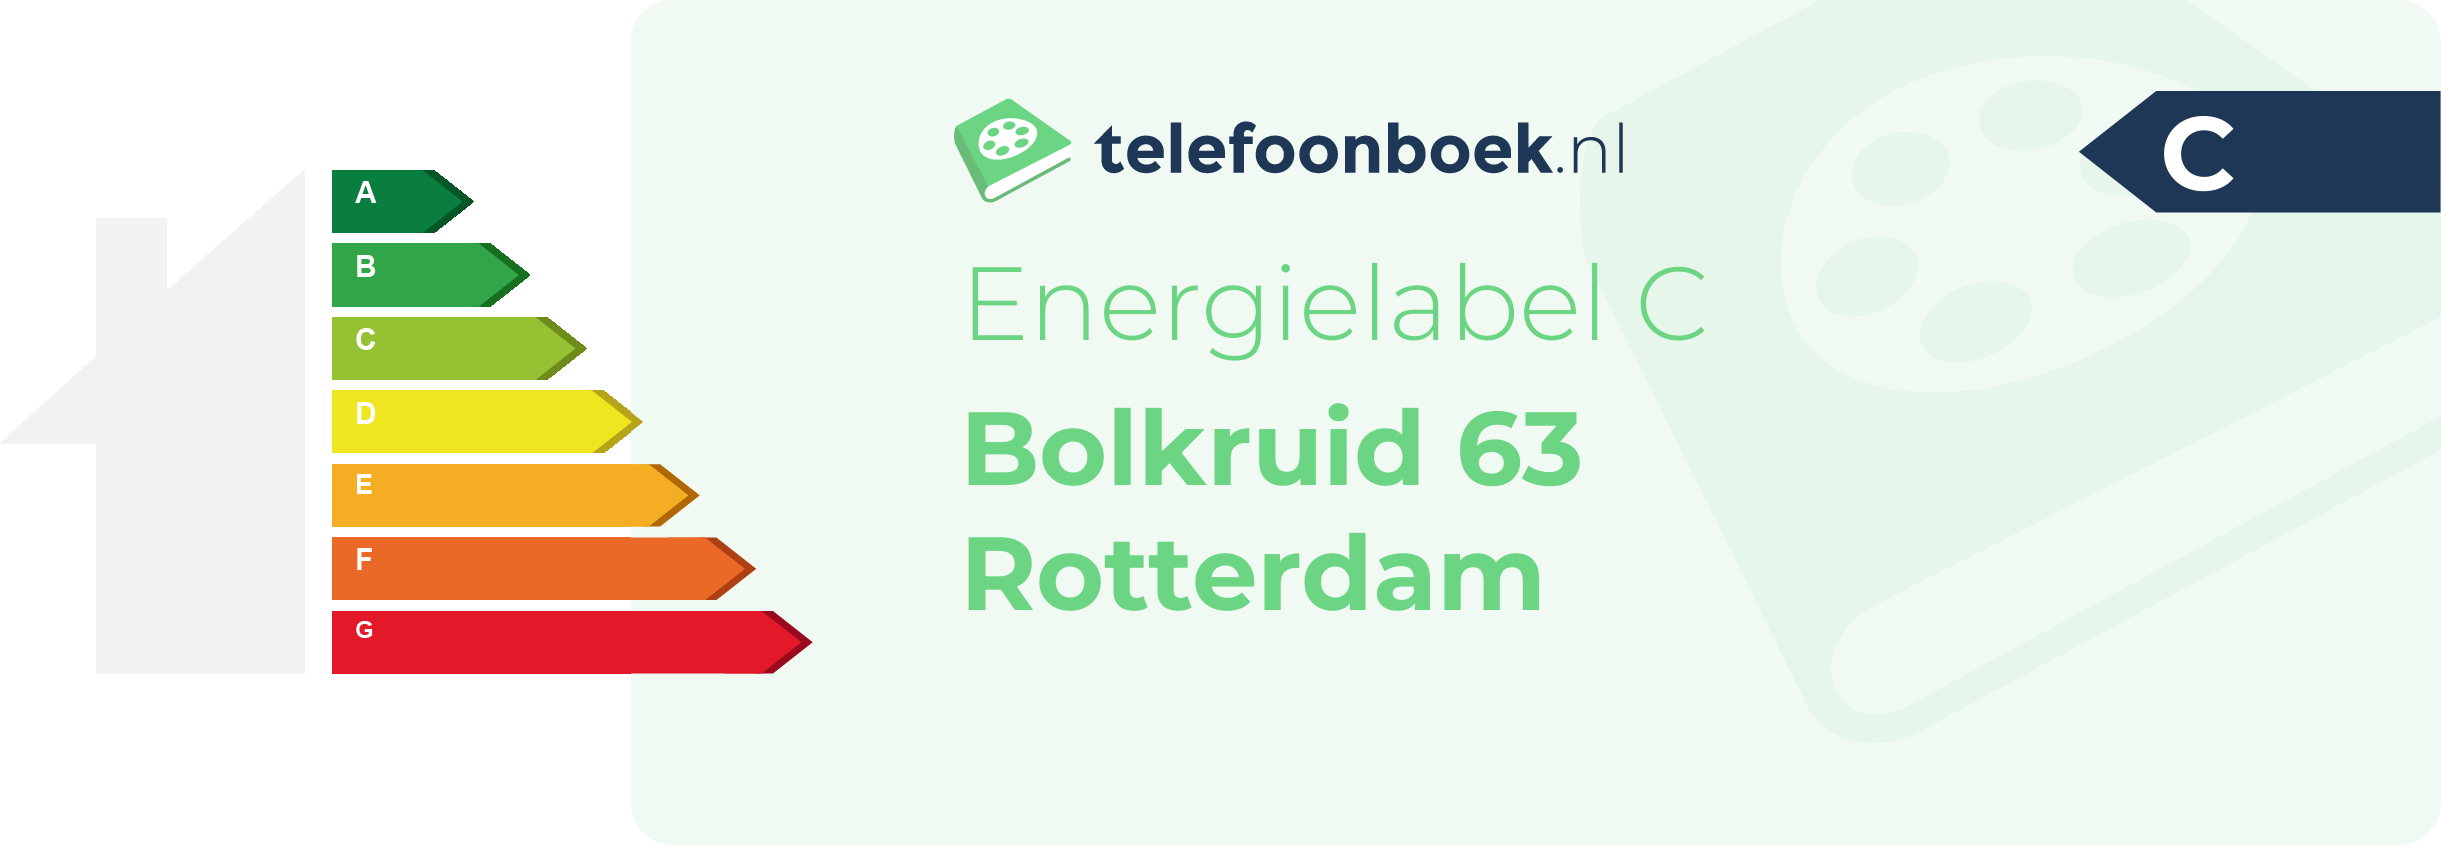 Energielabel Bolkruid 63 Rotterdam